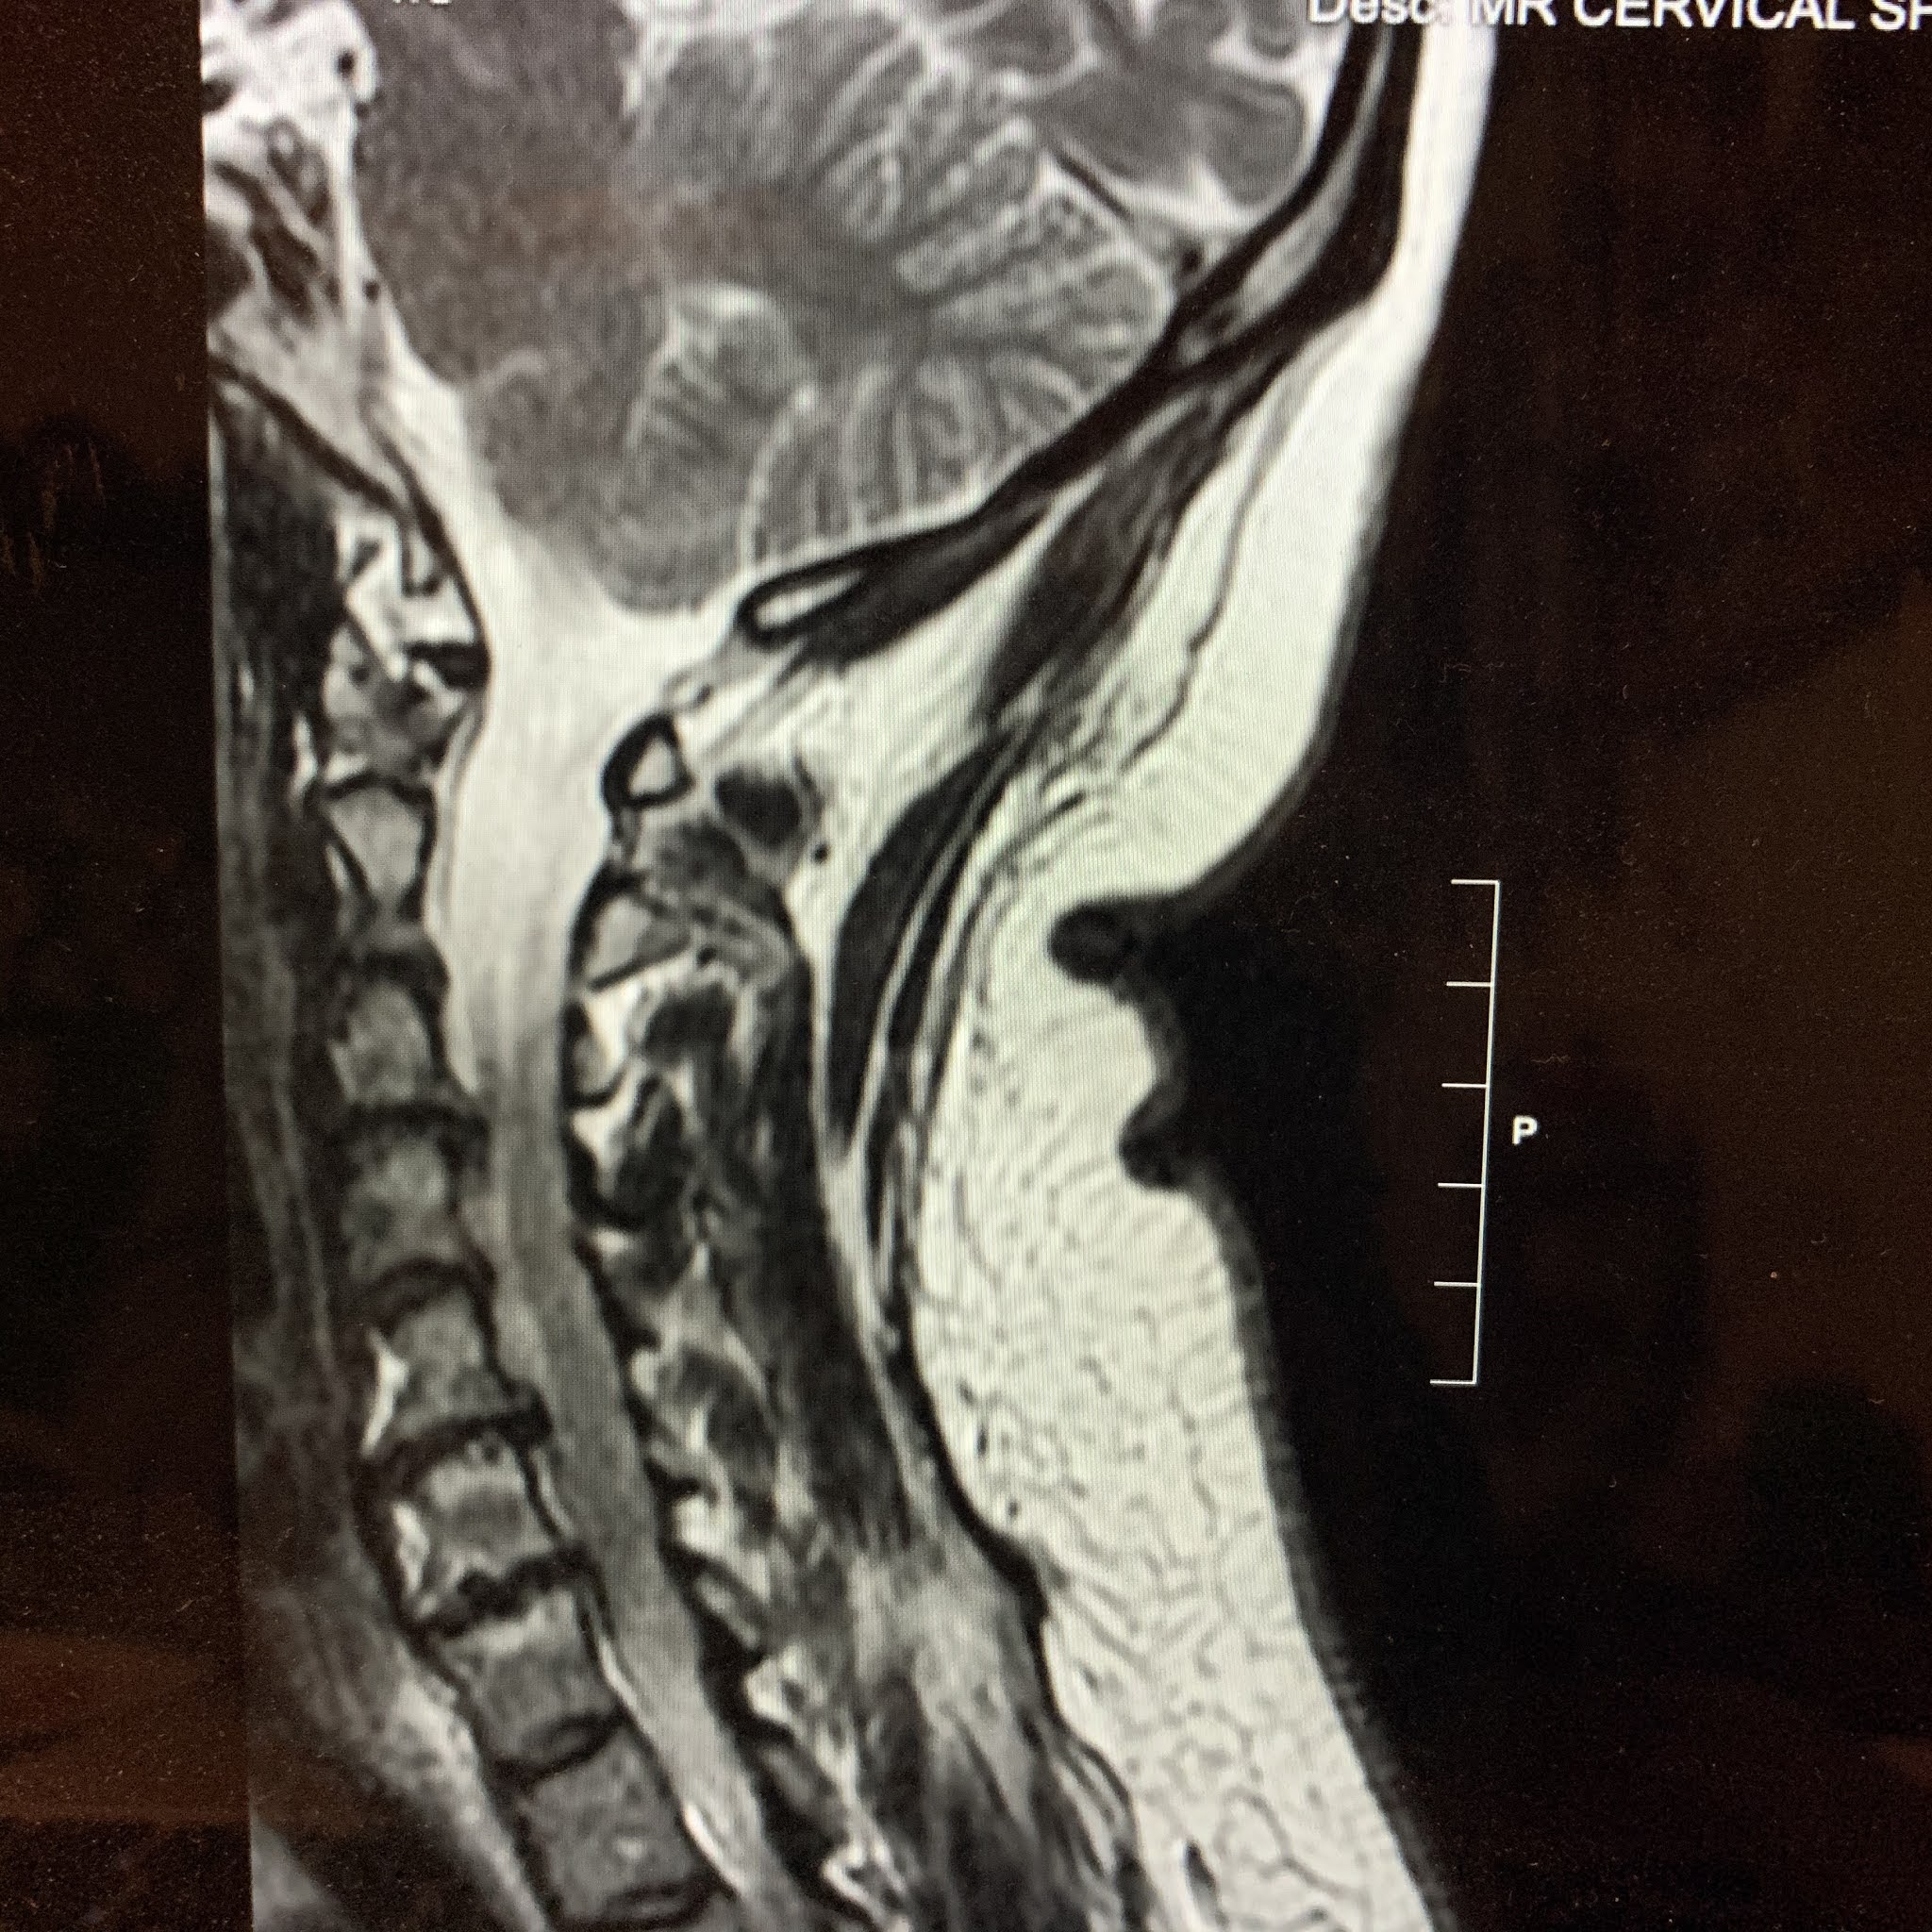 Team Tsunami: Final-ish Report on my Cervical MRI